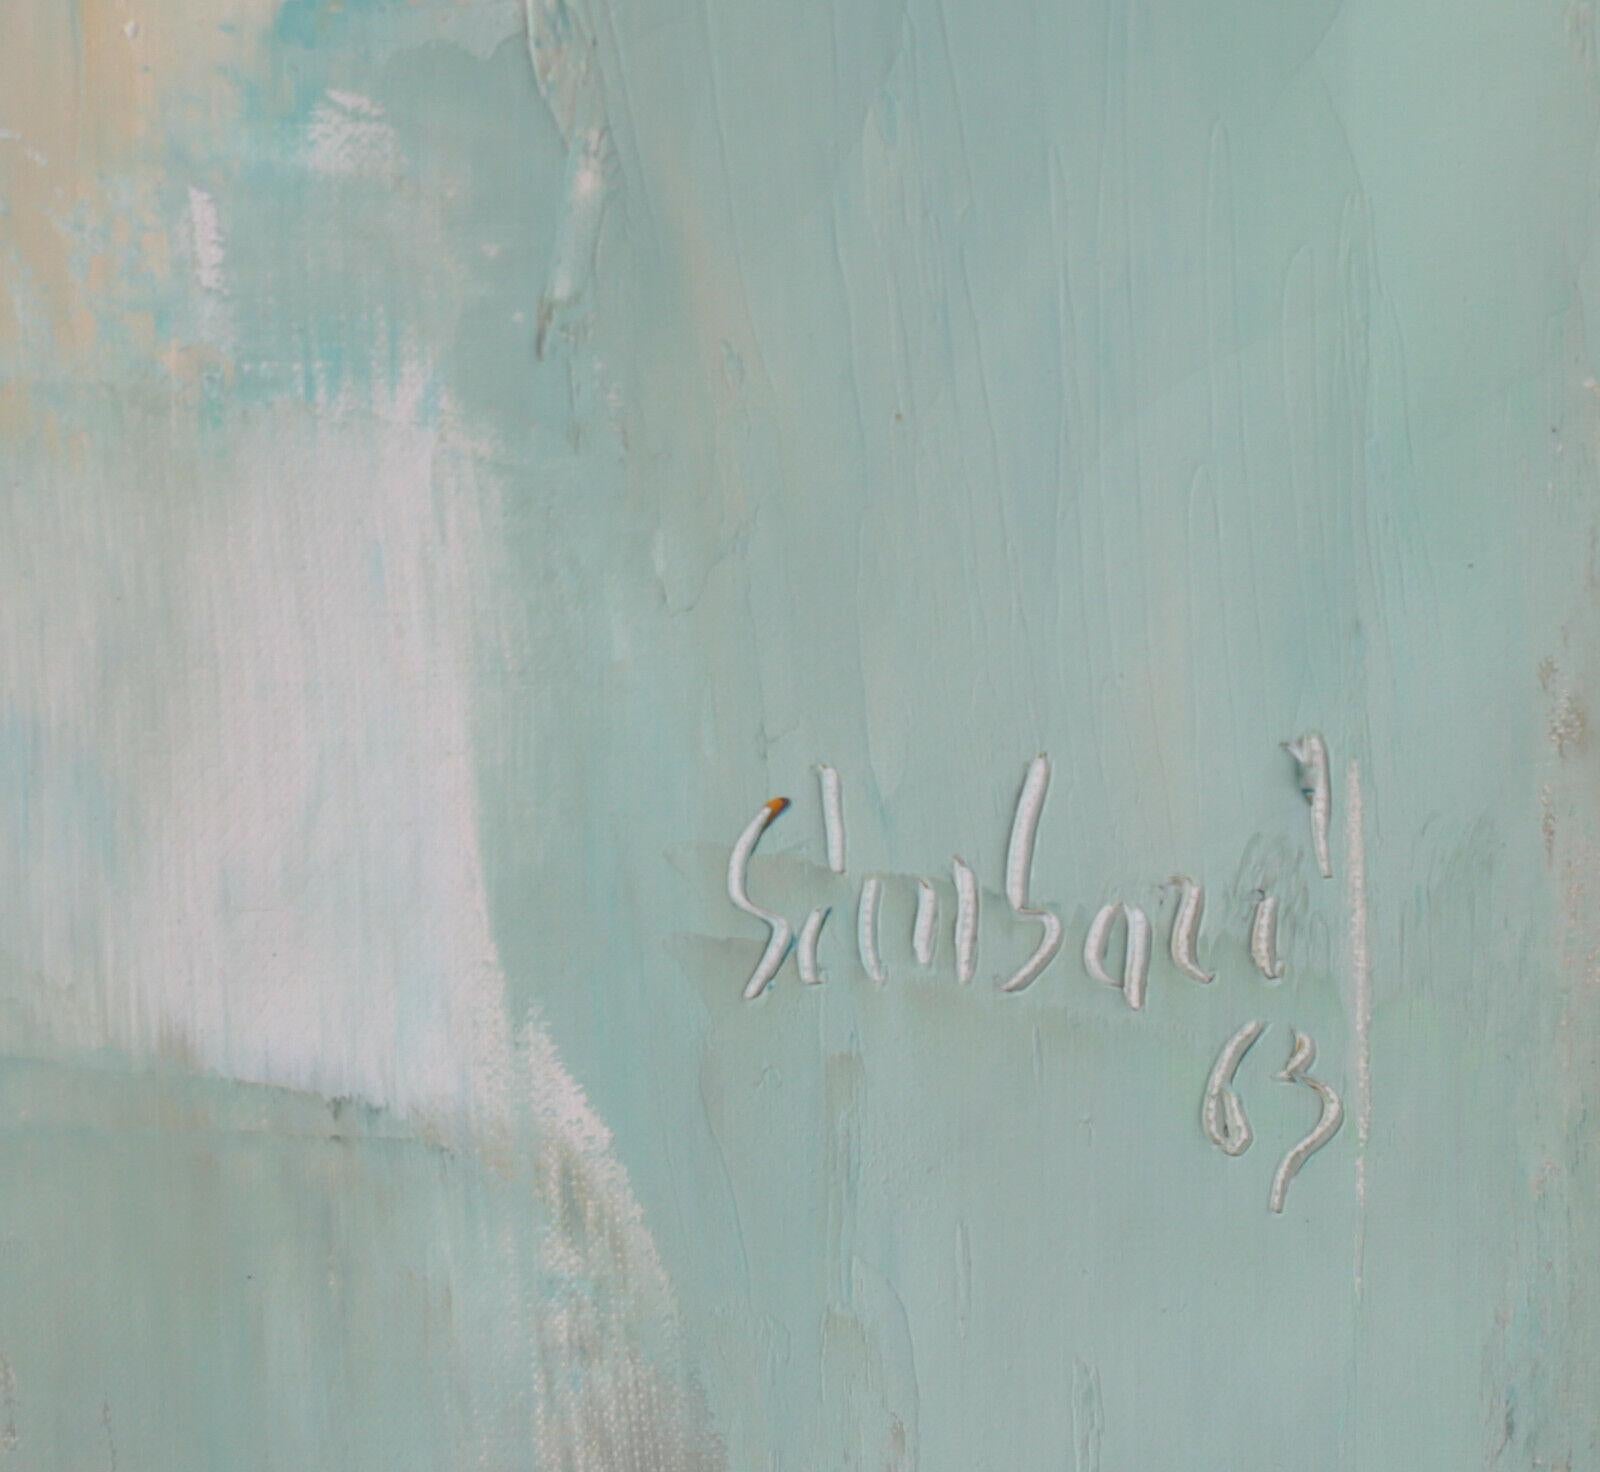 20th Century Nicola Simbari Oil on Canvas, Green Harbor, Signed